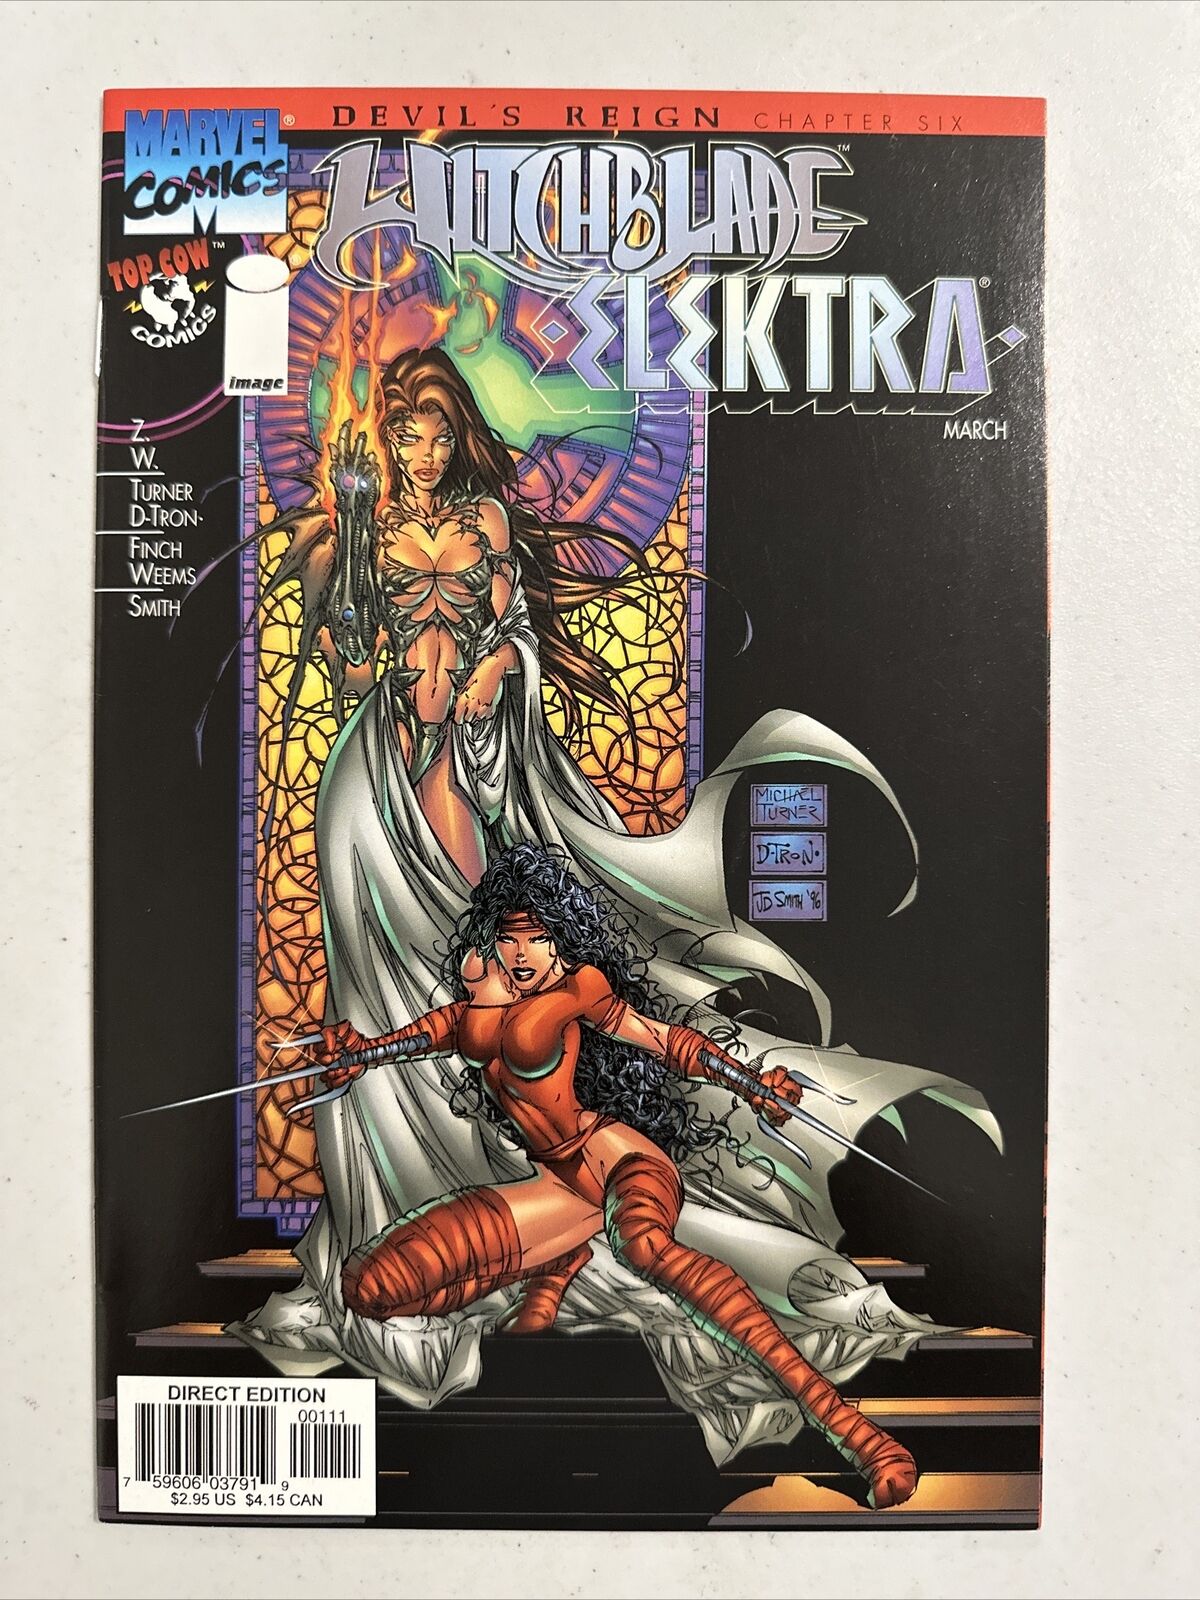 Witchblade Elektra #1 Image Marvel Comics HIGH GRADE COMBINE S&H RATE